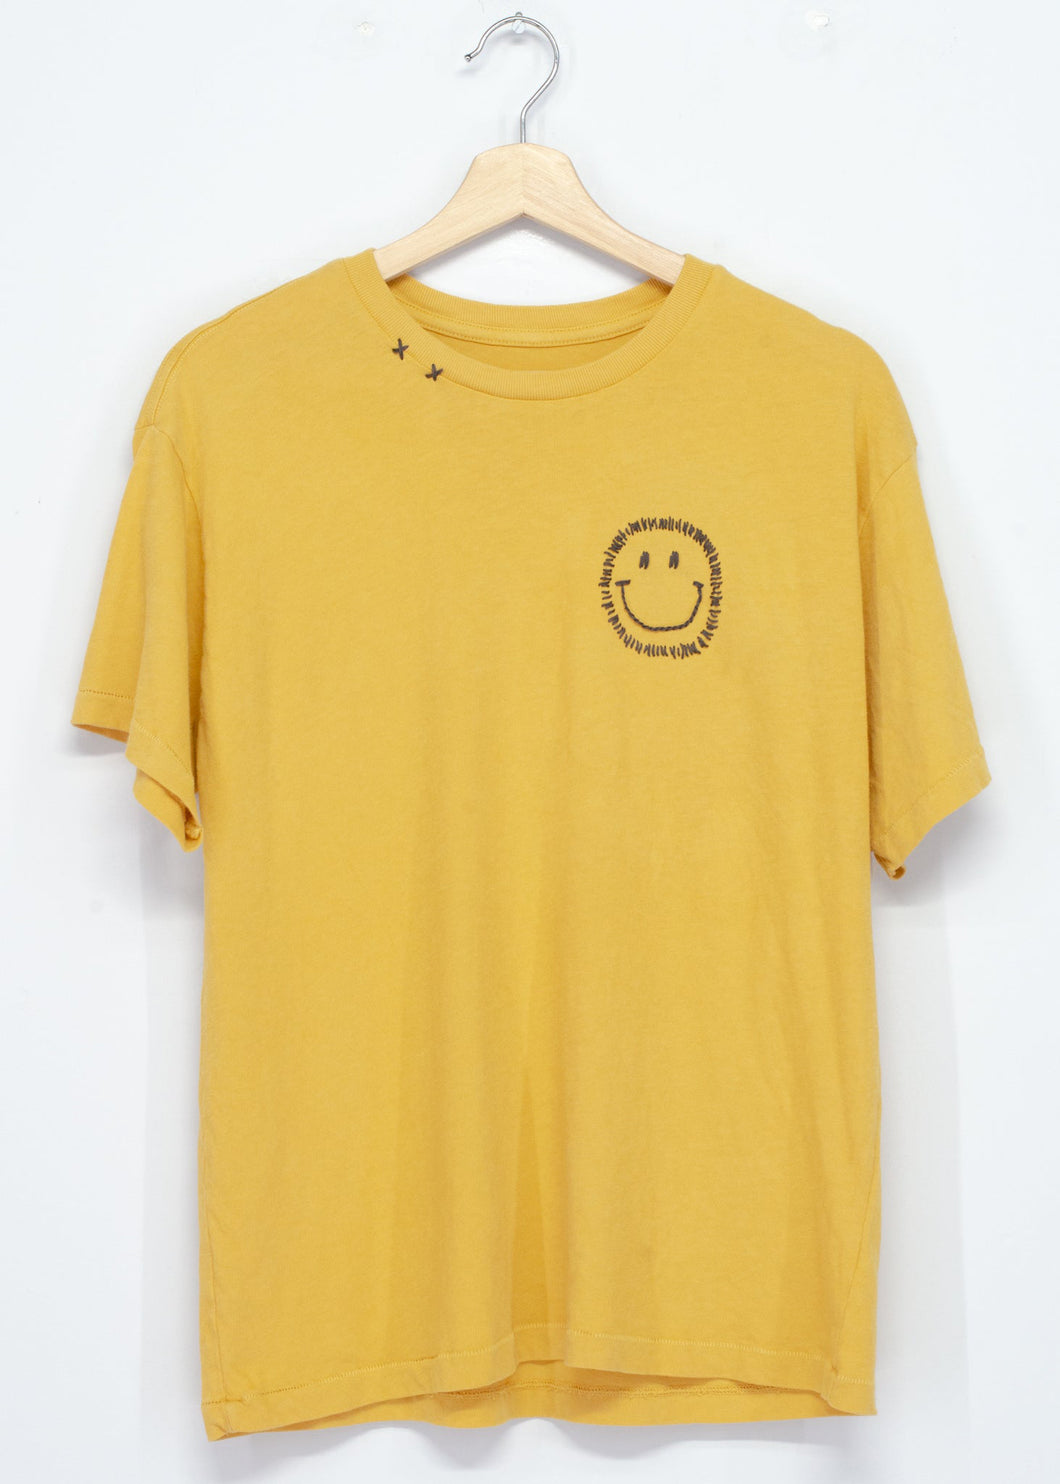 Smiley Face Boyfriend Tee- Mustard Yellow